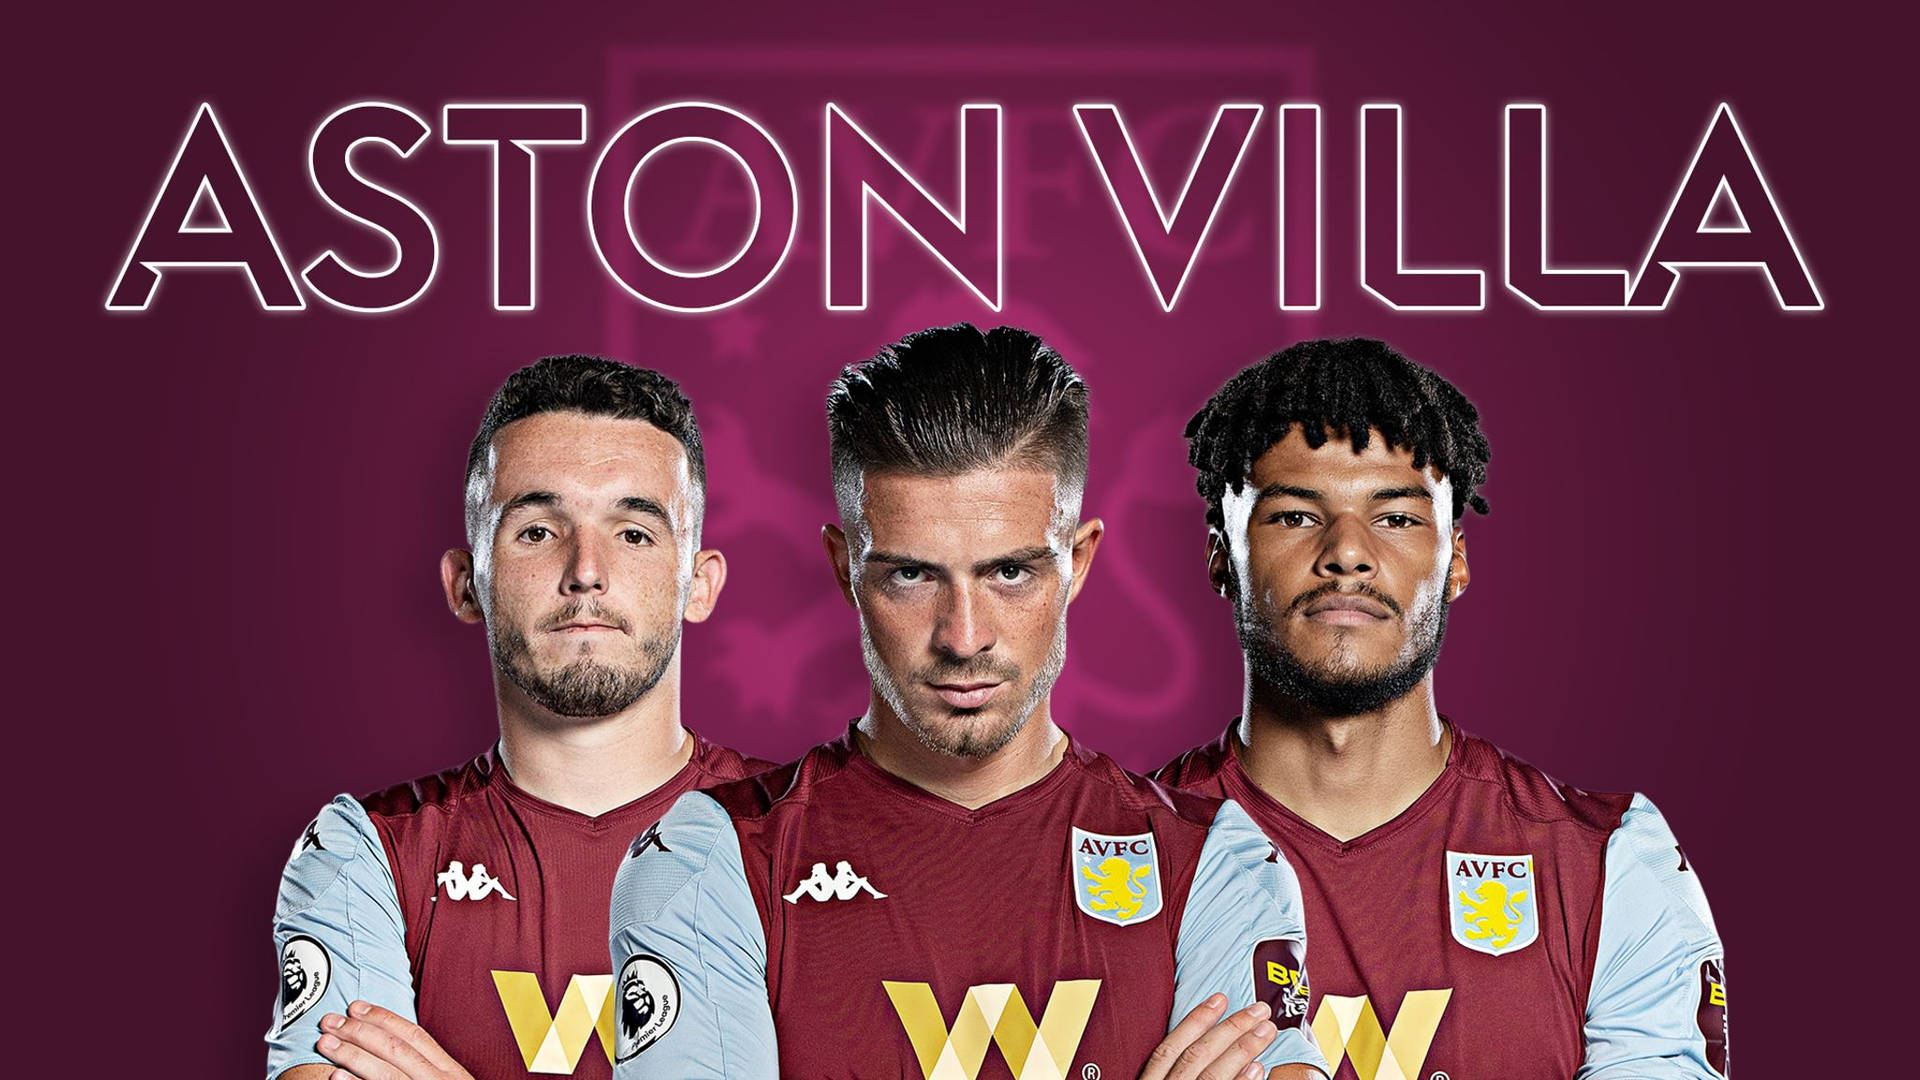 Aston Villa Fan Poster Background